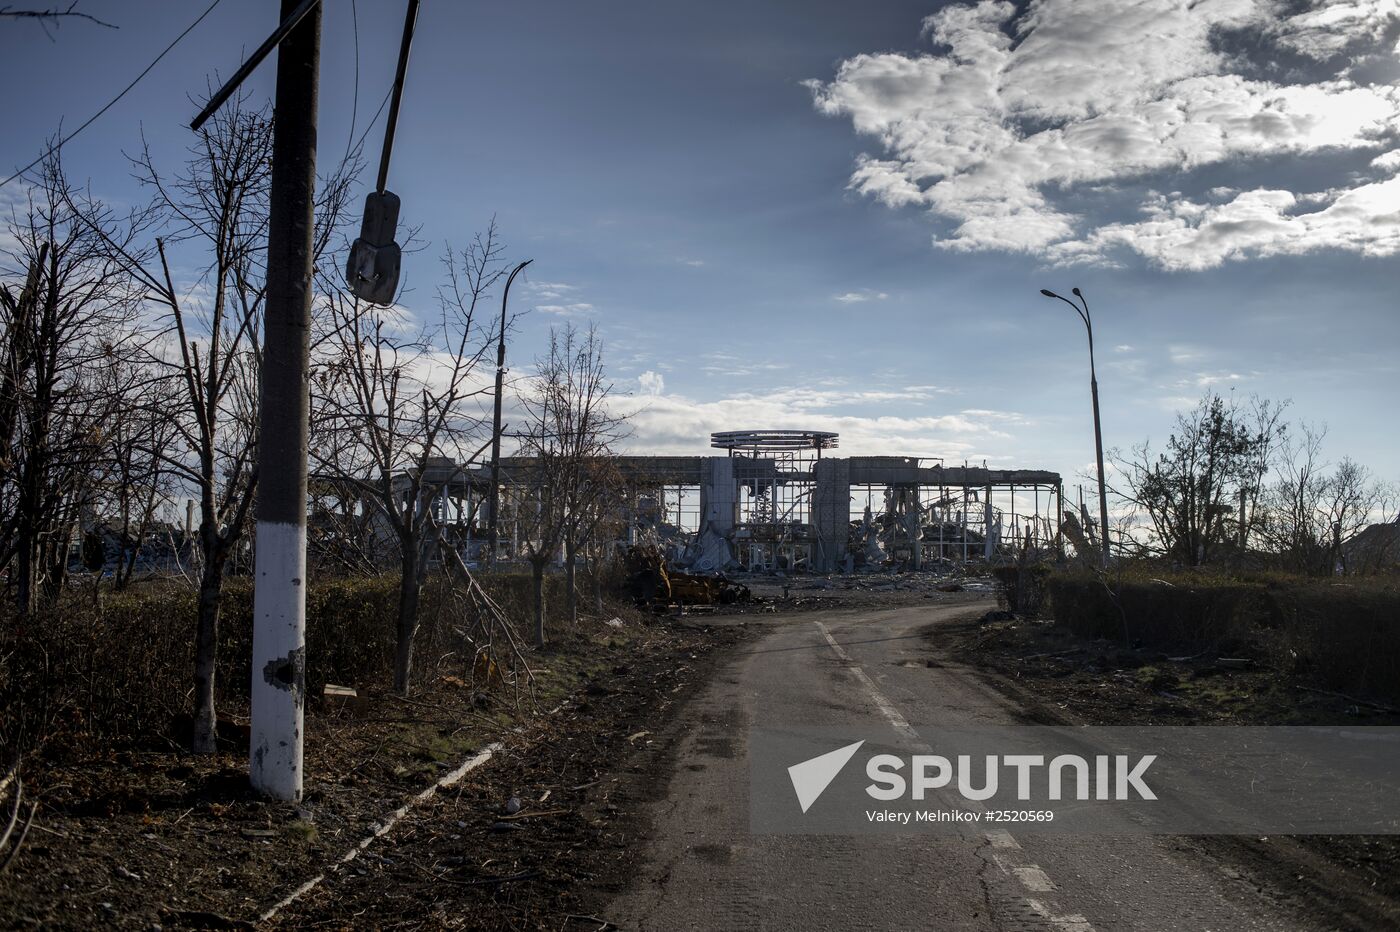 Lugansk airport in ruins